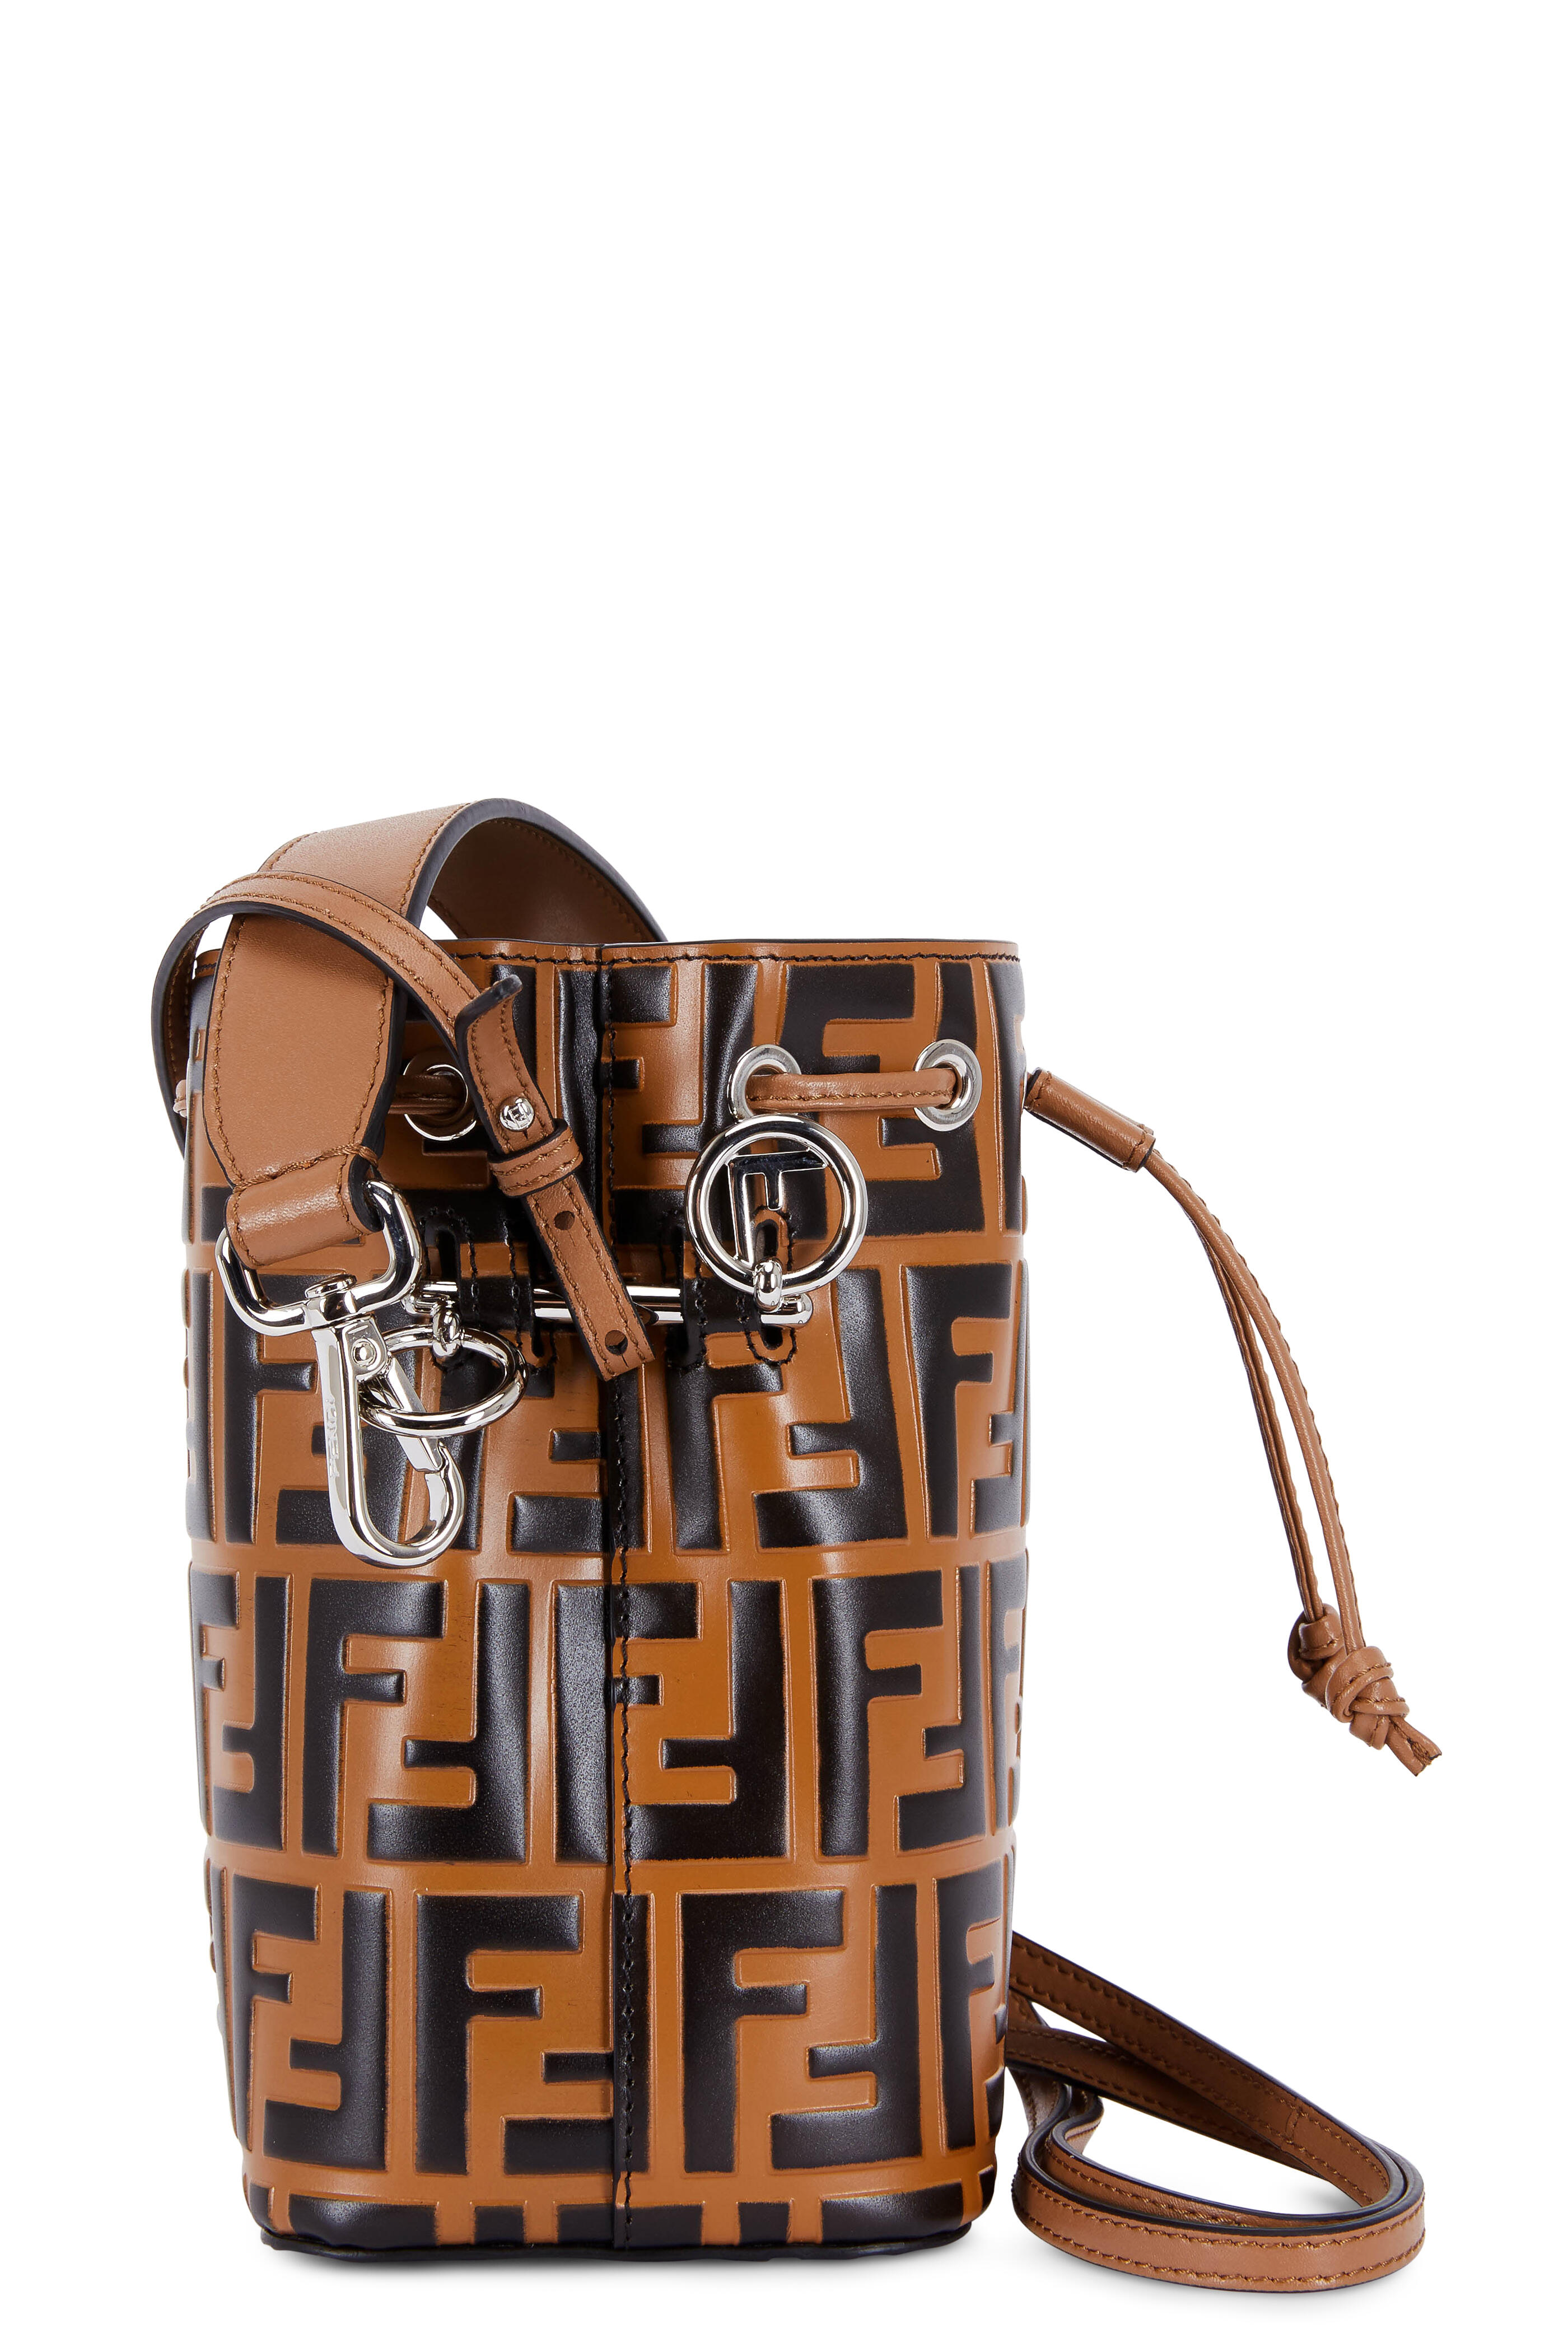 Fendi Mon Tresor Mini Leather Cross-Body Bag